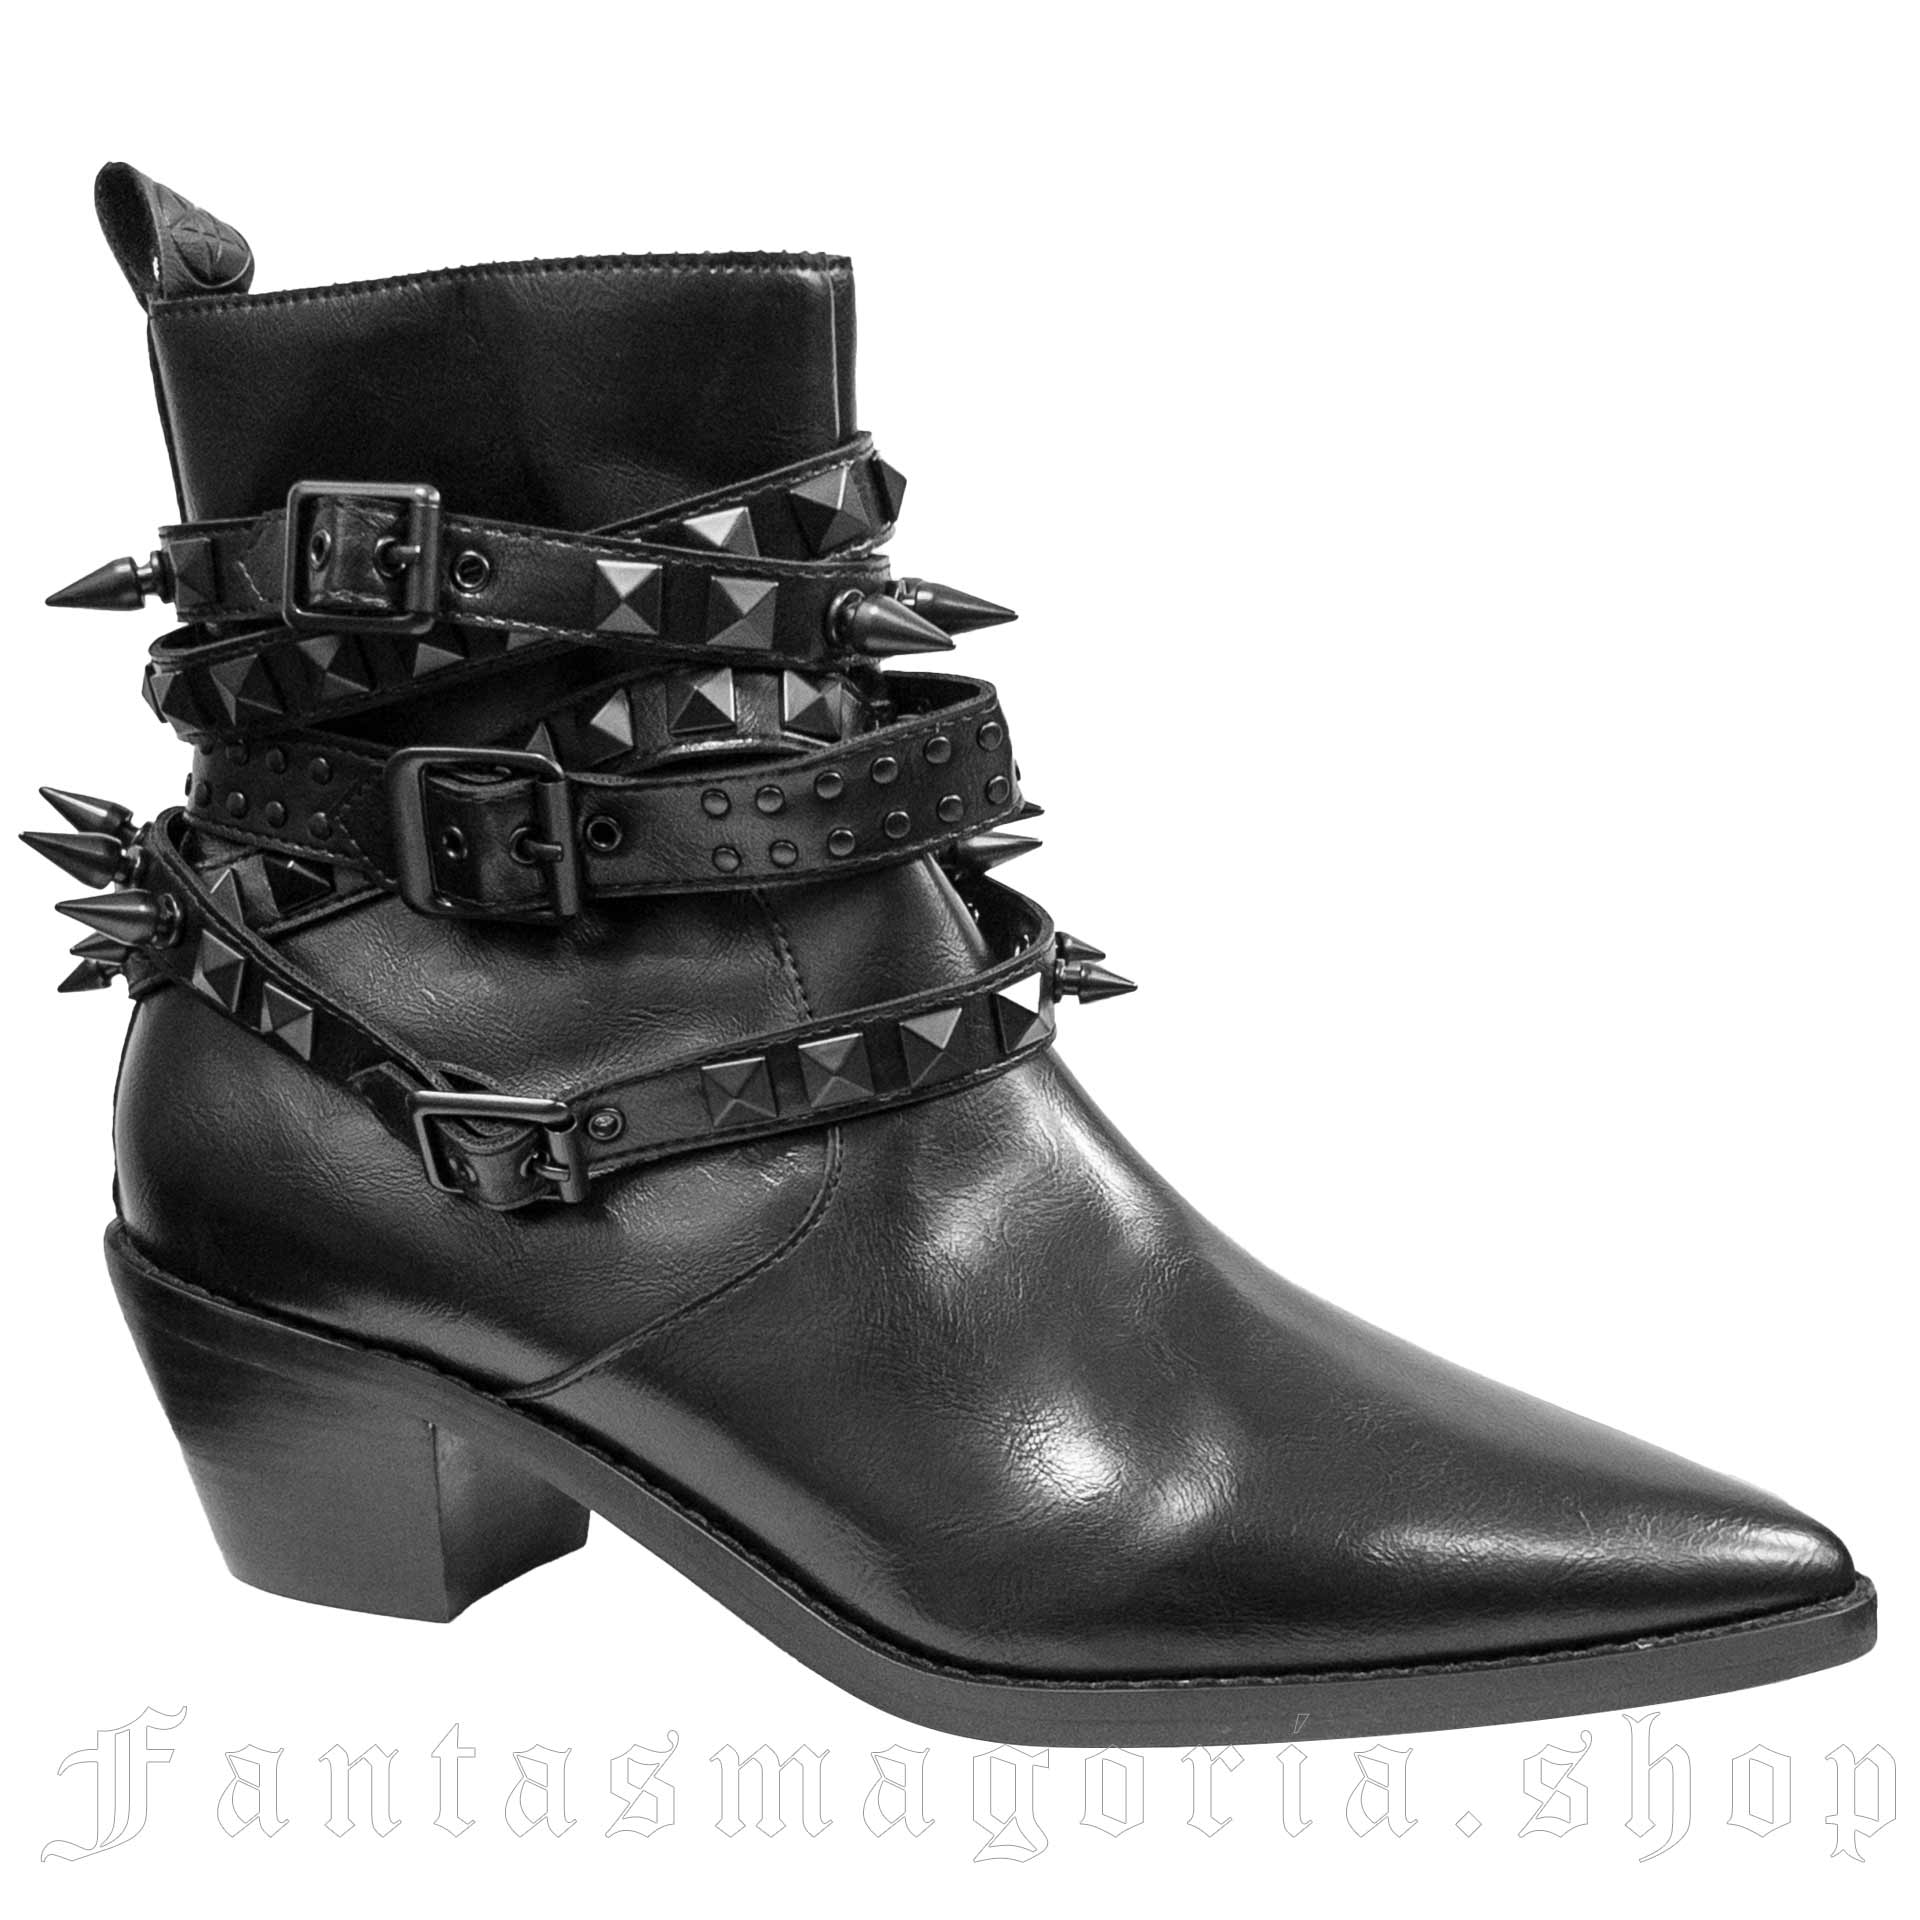 Callista Black Stud Boots - Killstar - KSRA008596 1